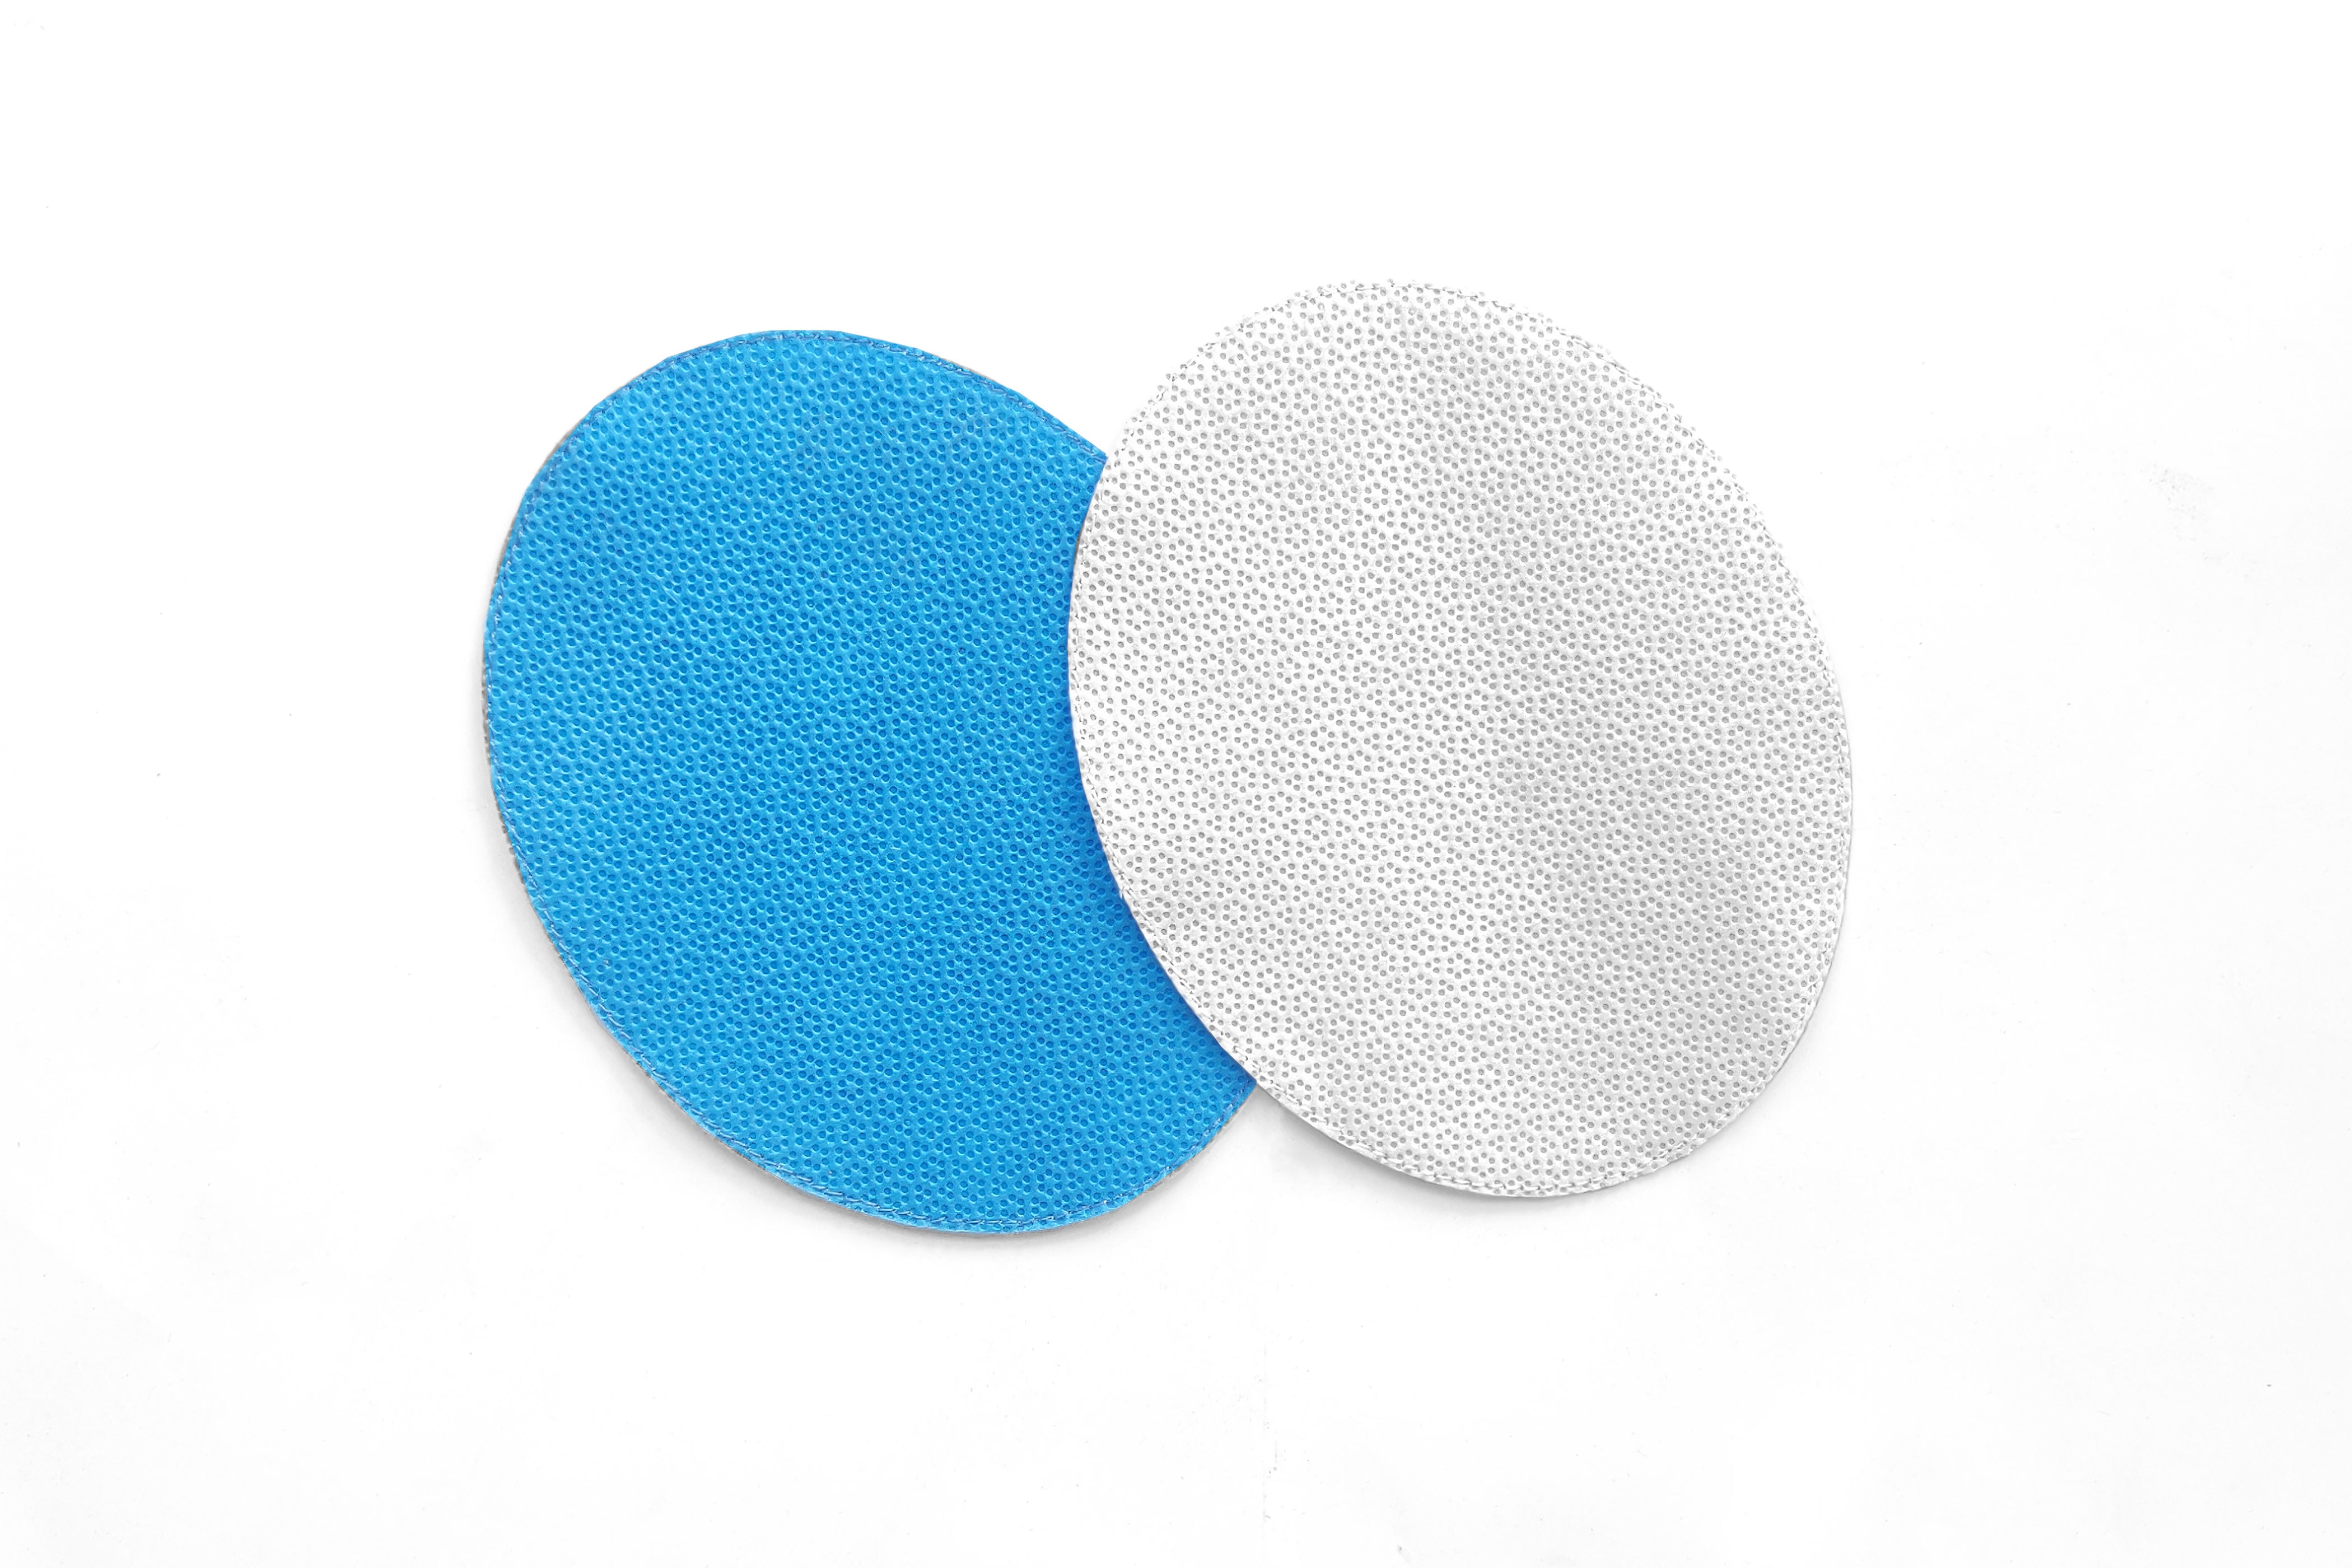 Mask Filter - Recyclable Medical Grade Polypropylene Fabric